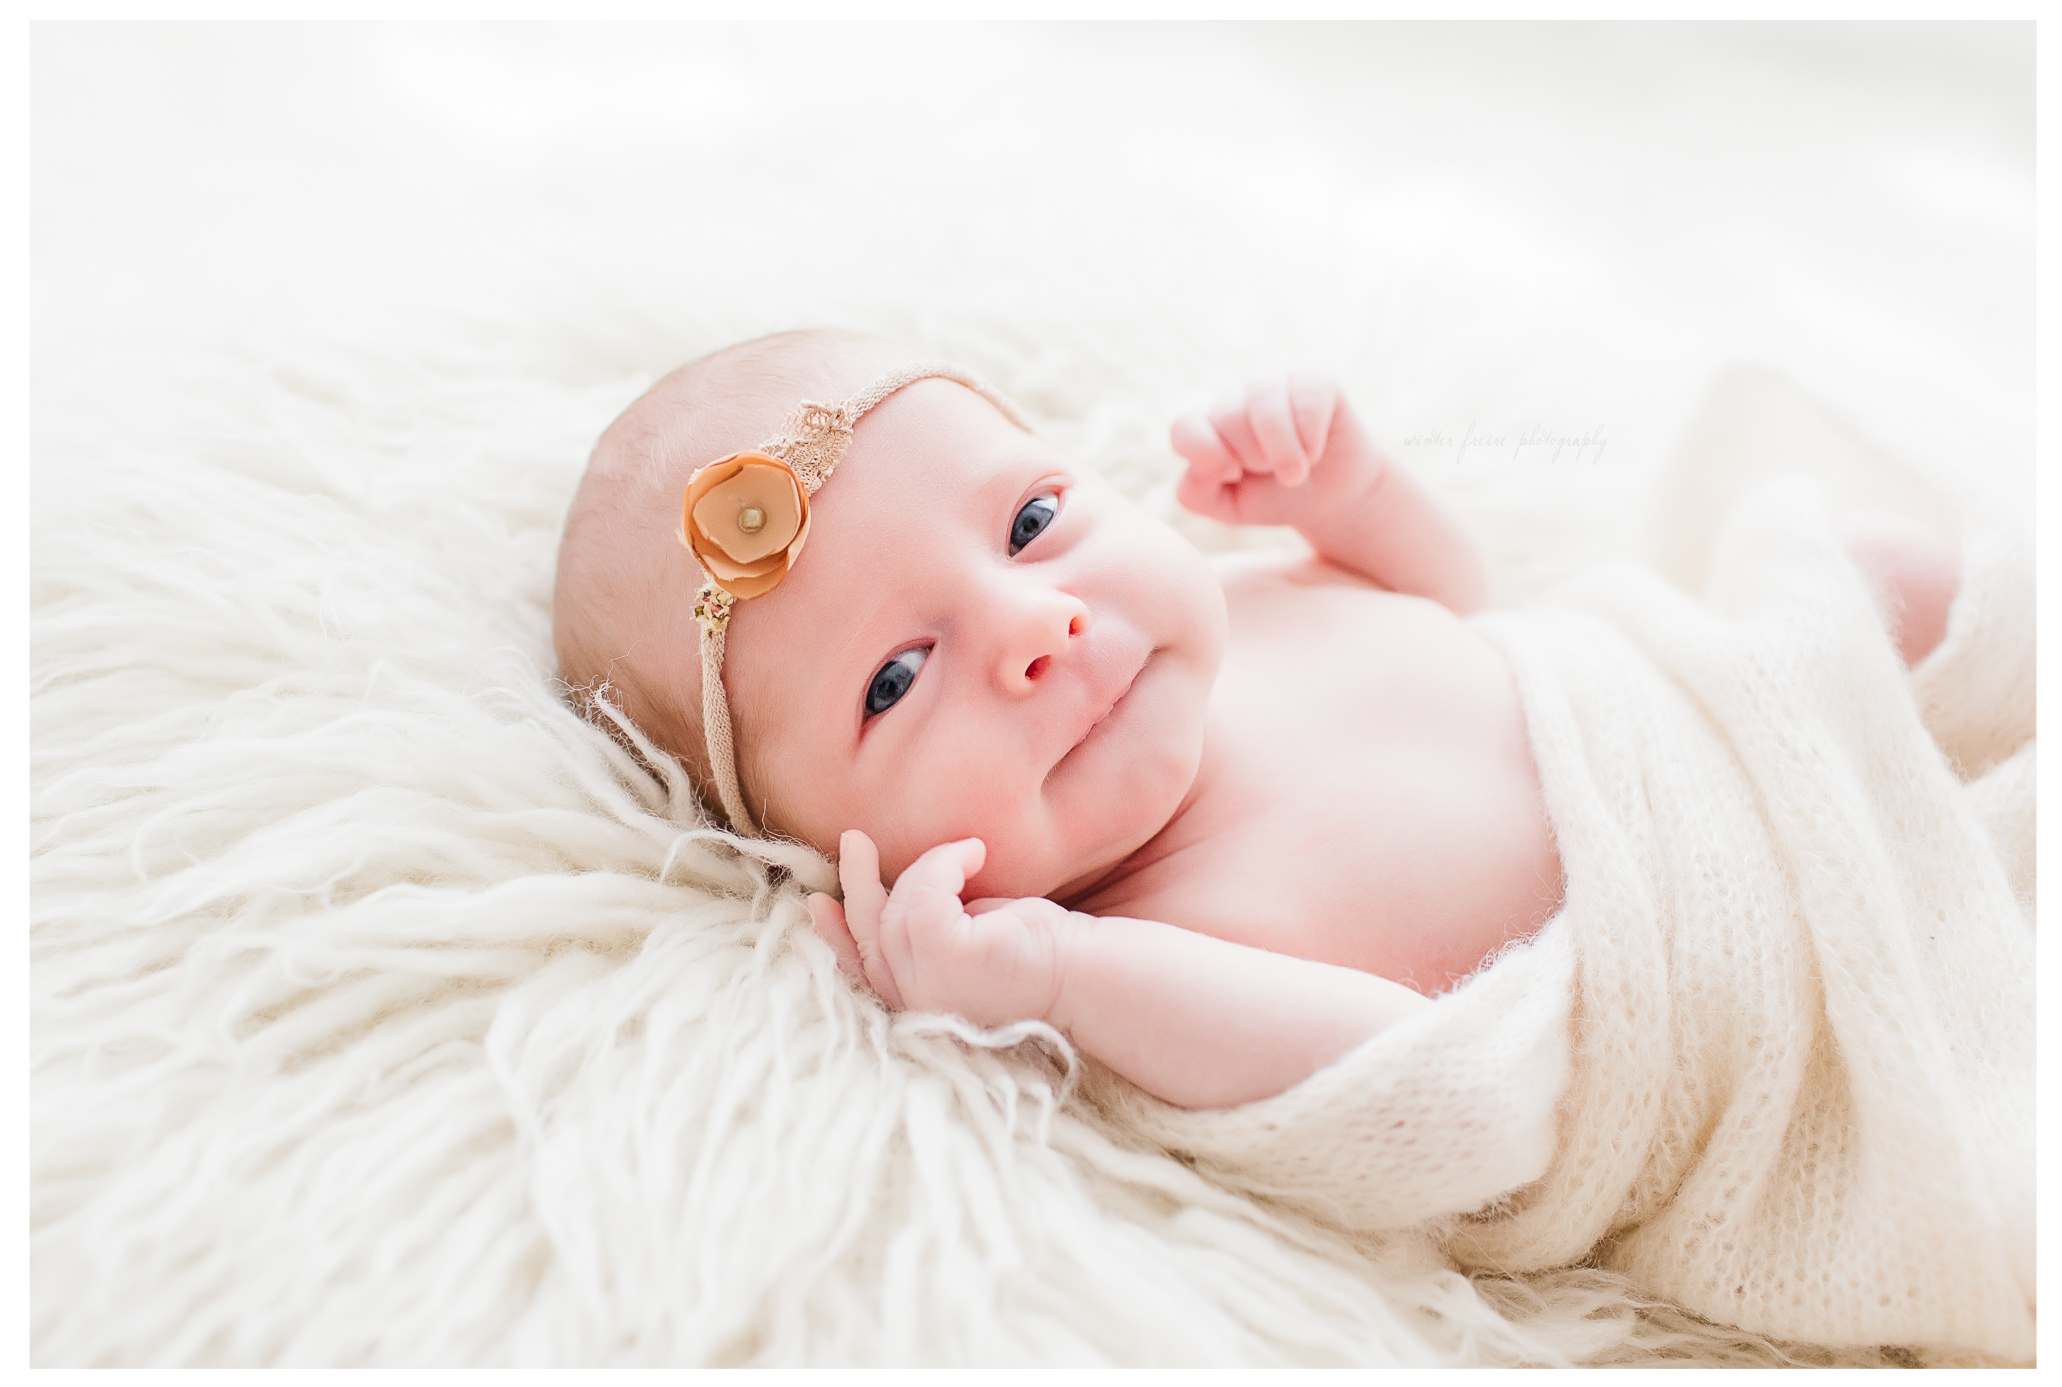 Winter Freire Photography | Newborn Photography Session | Sweet Pure Organic Newborn Portraits | Dayton, Ohio Newborn Photography | Natural Light | Fine Art Newborn Photography | Dayton, Ohio Newborn Photographer | Fine Art Newborn Photographer